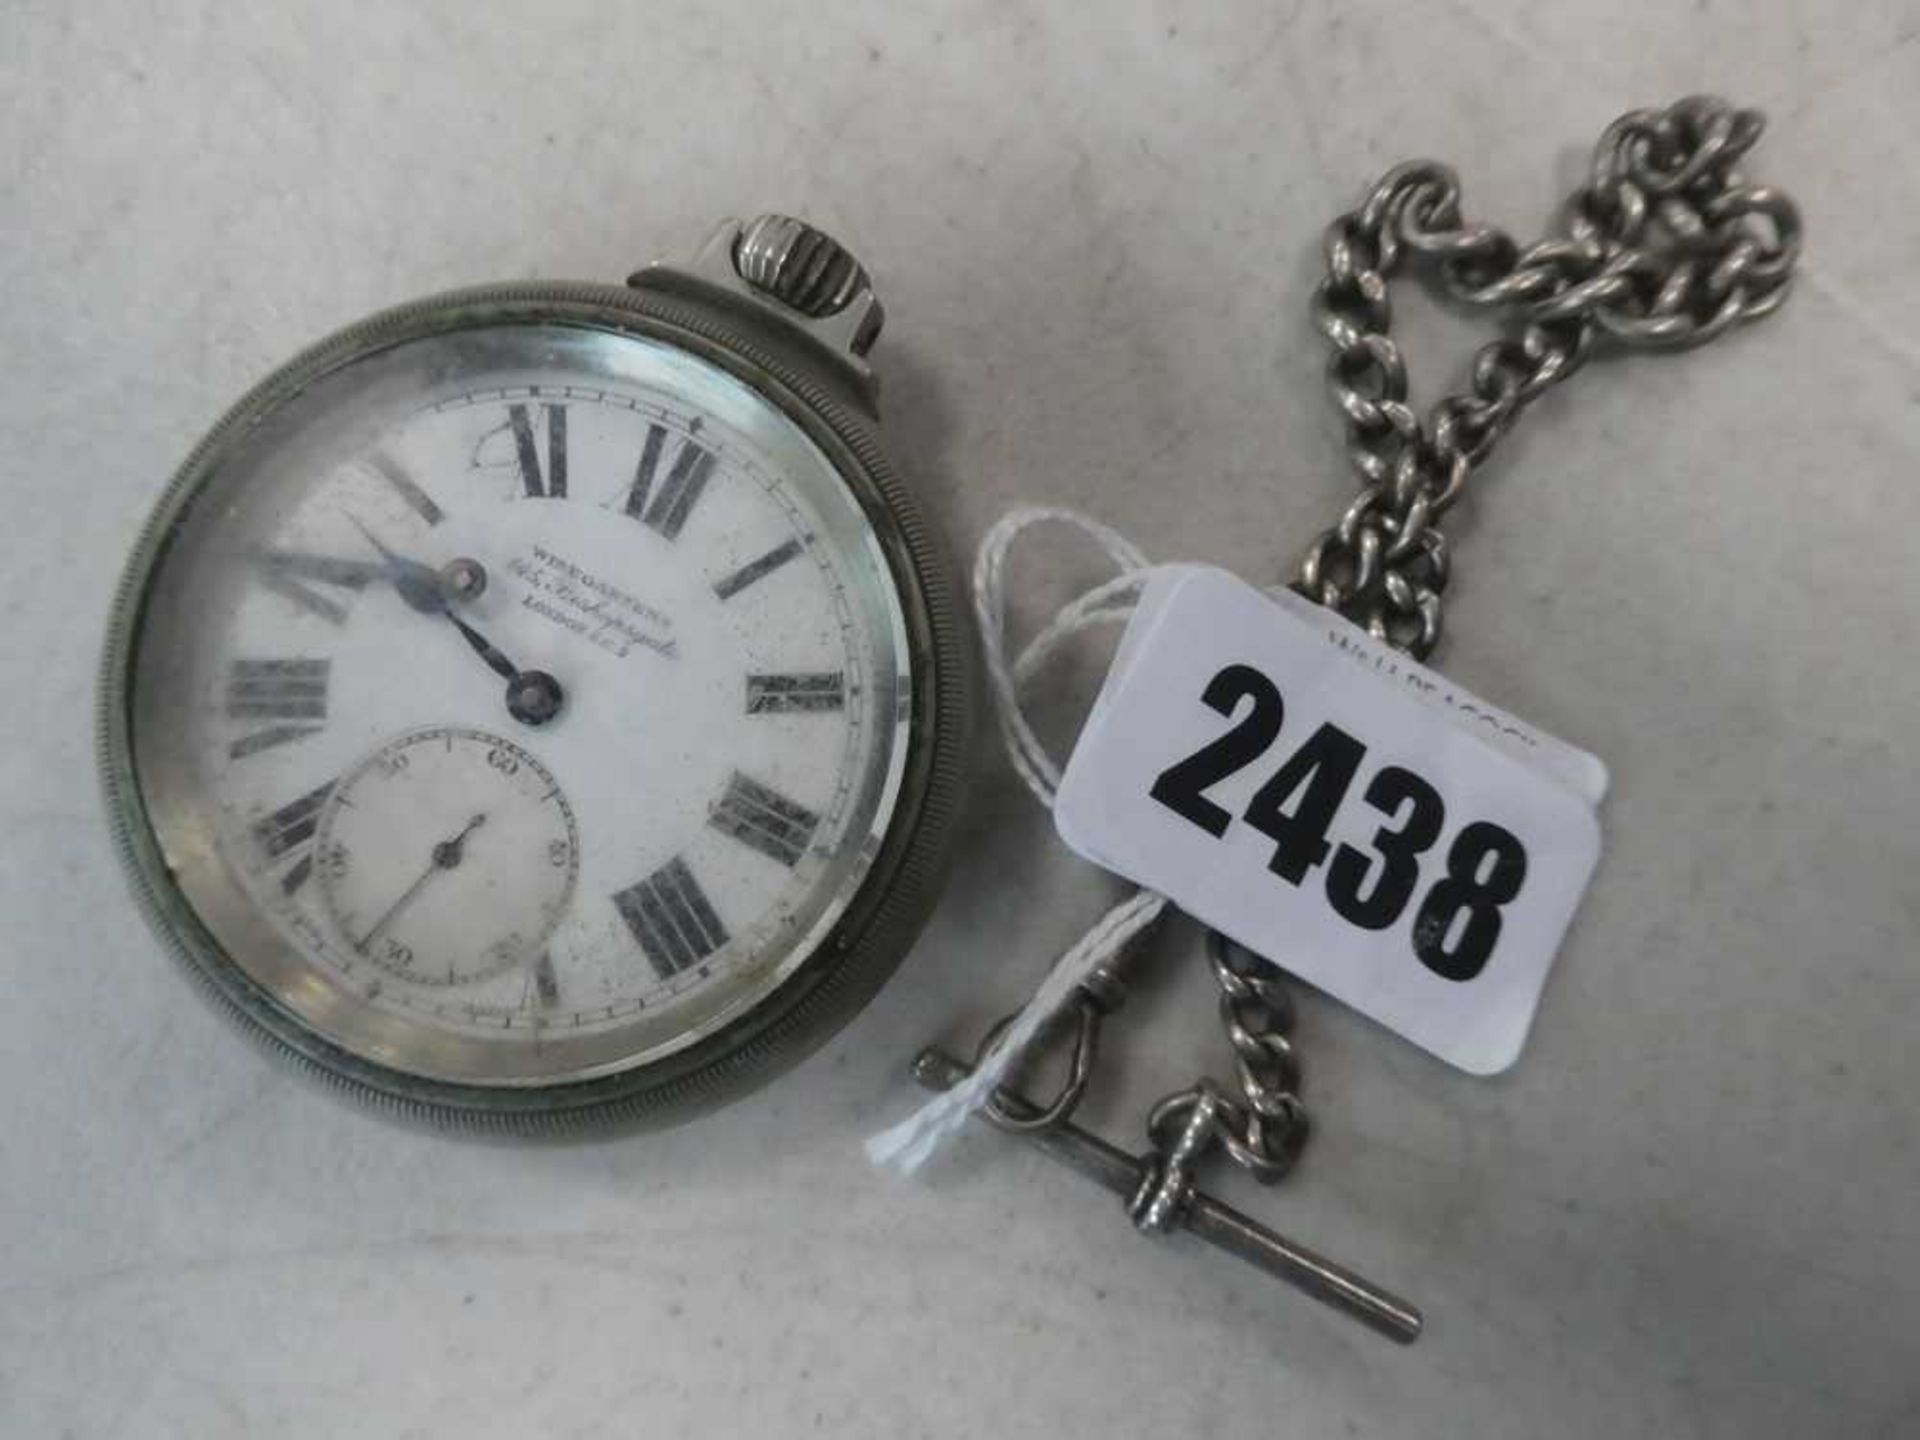 A base metal open face Railway Regulator pocket watch by Winegarten's, the white enamel dial with